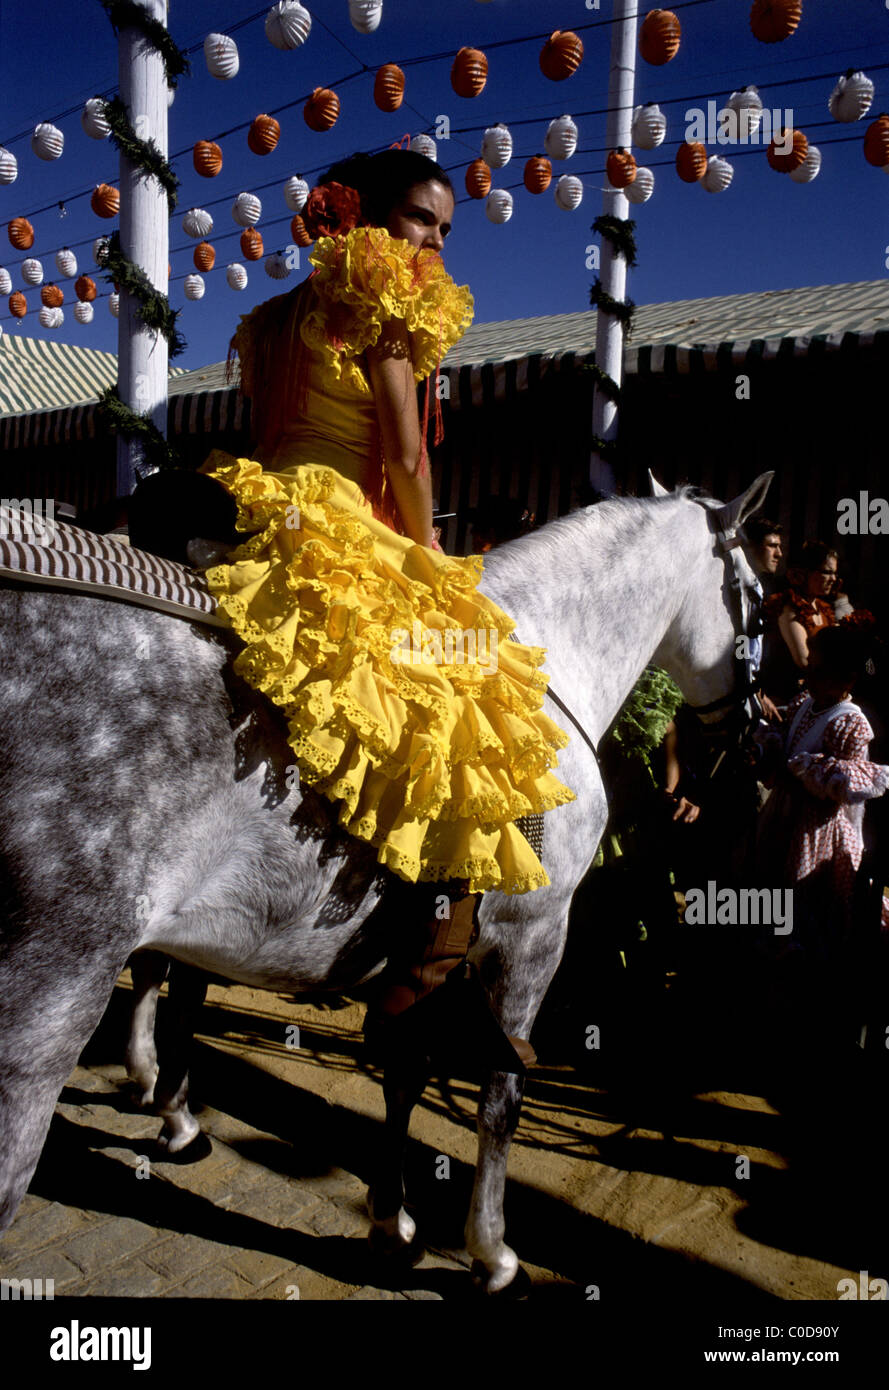 The Seville Spring Fair, La Feria de abril de Sevilla, Sevilla , Andalucia,Spain. Girl on horse with traditional flamenco dress Stock Photo